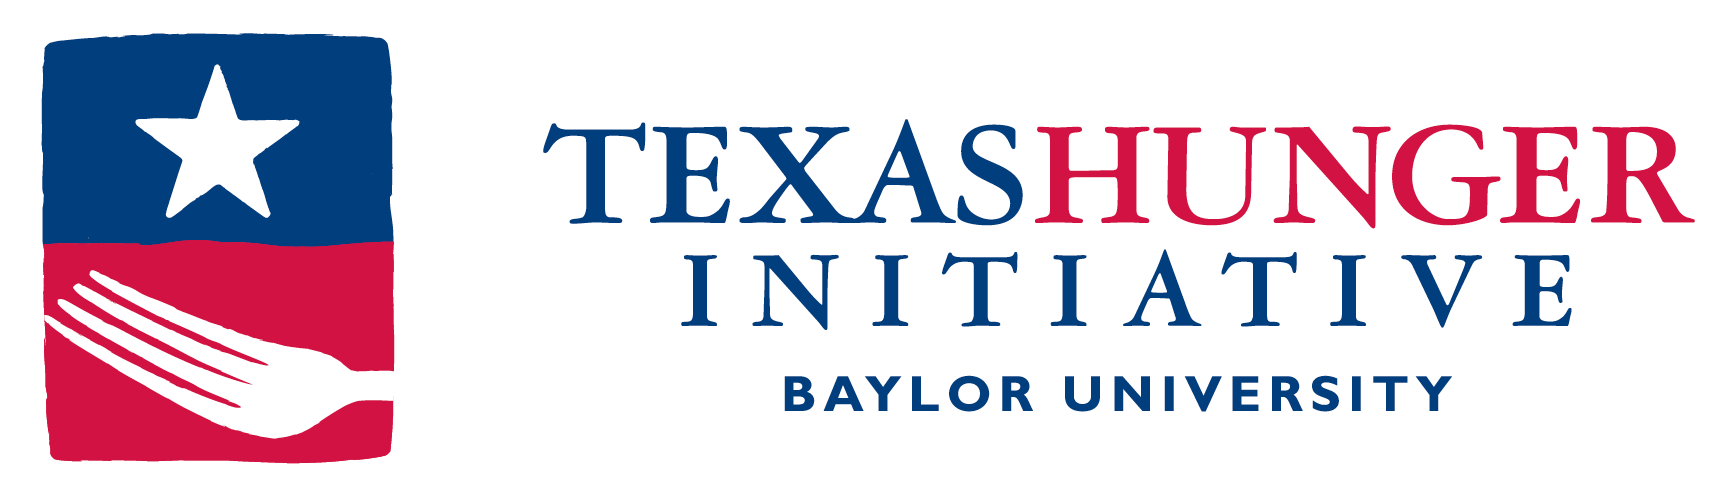 Texas Hunger Initiative Baylor University